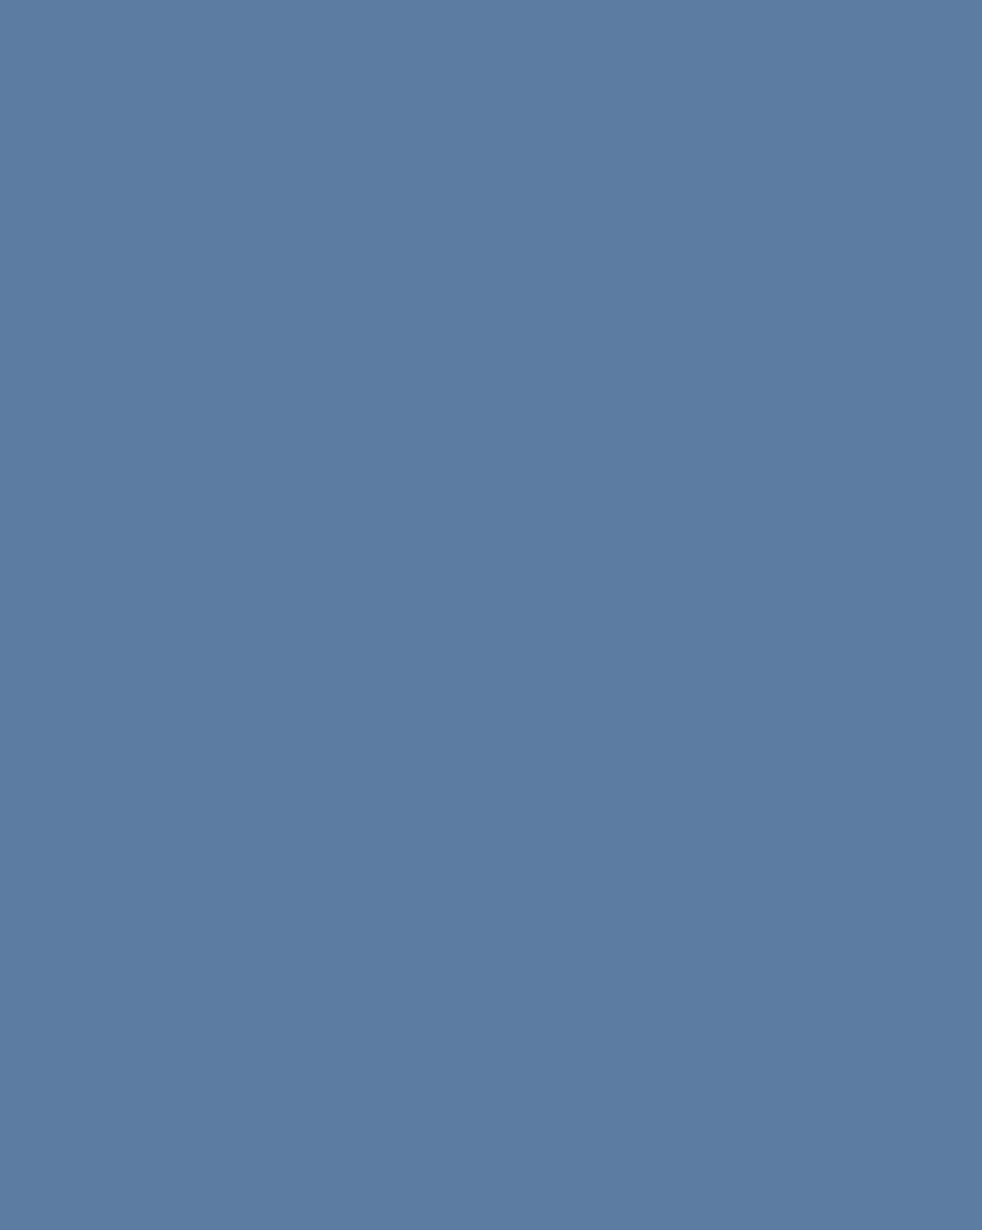 Марк Шагал. Композиция с цветами (фрагмент). Литография. 1966. Фотография: Музей-квартира Майи Плисецкой, Москва